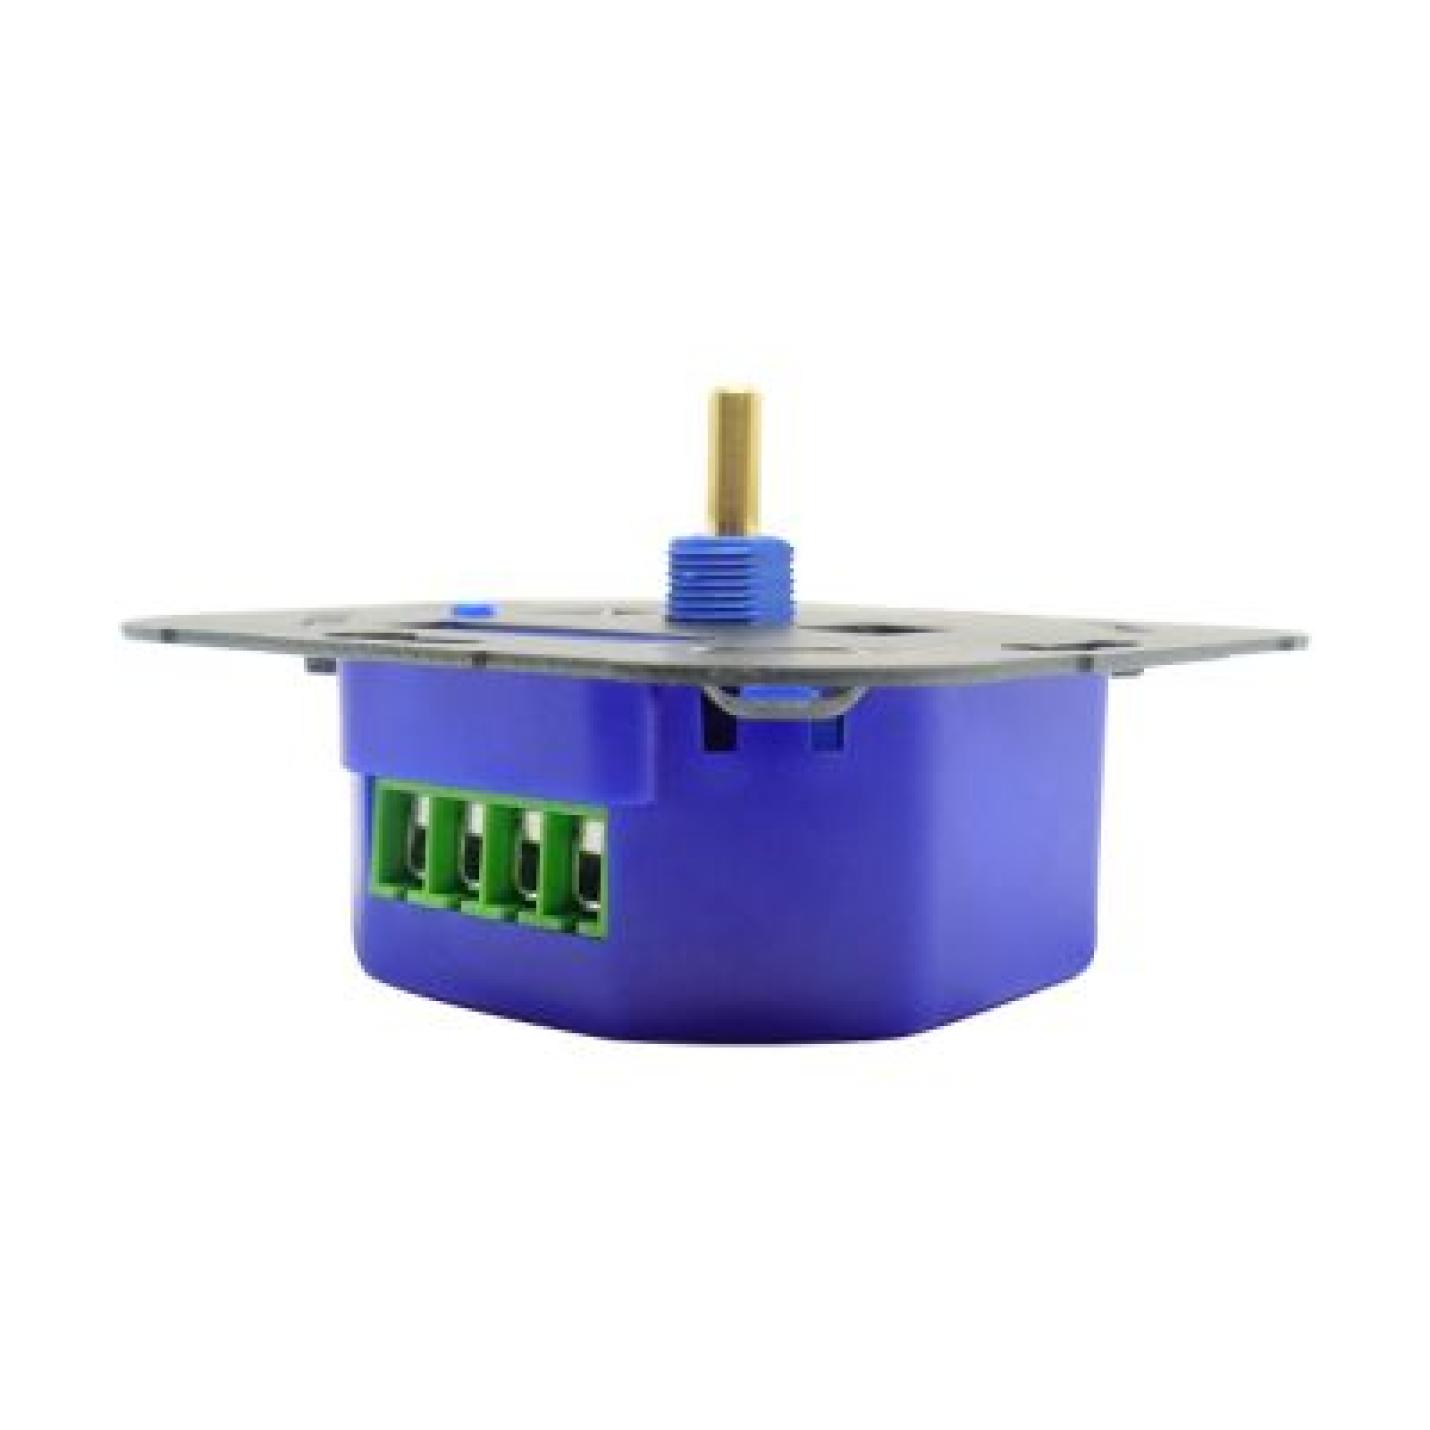 Noxion Automatische LED Dimmer Schakelaar RLC 0-300W 220-240V; Afbeelding: 4